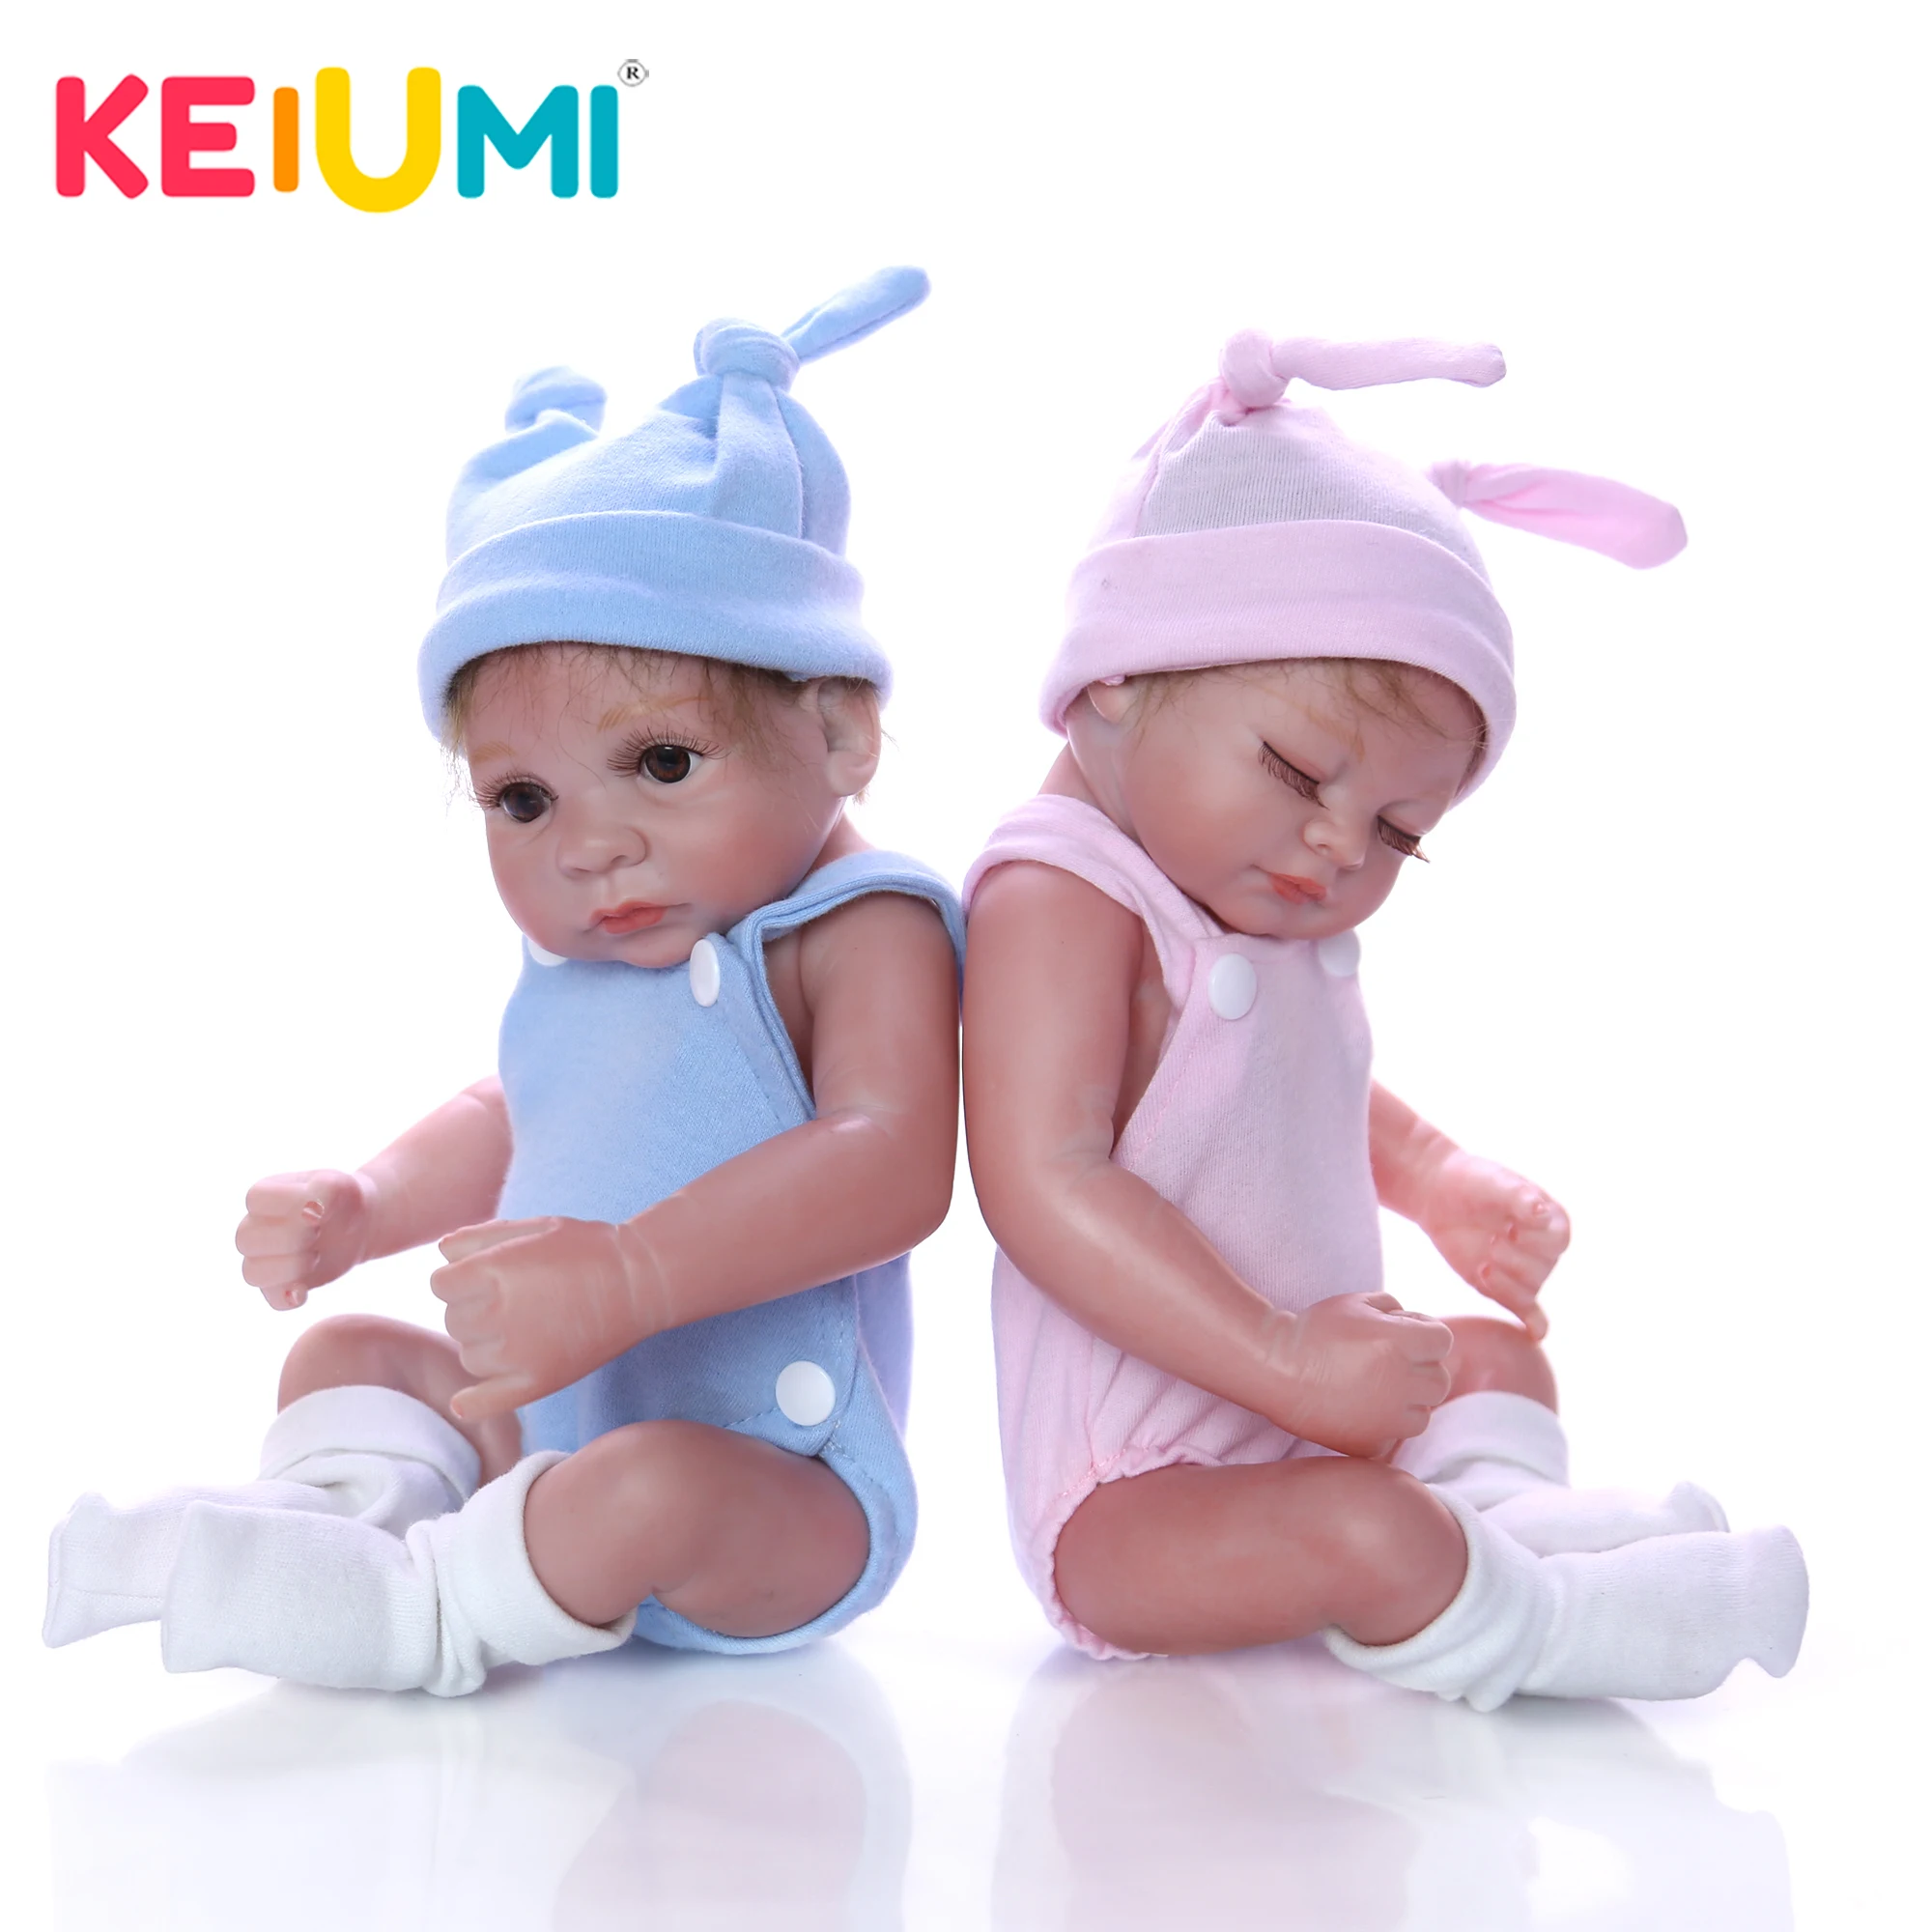 Lifelike Body Reborn Doll Baby Boys Girls for Sleepping Play Toys Gifts UK 